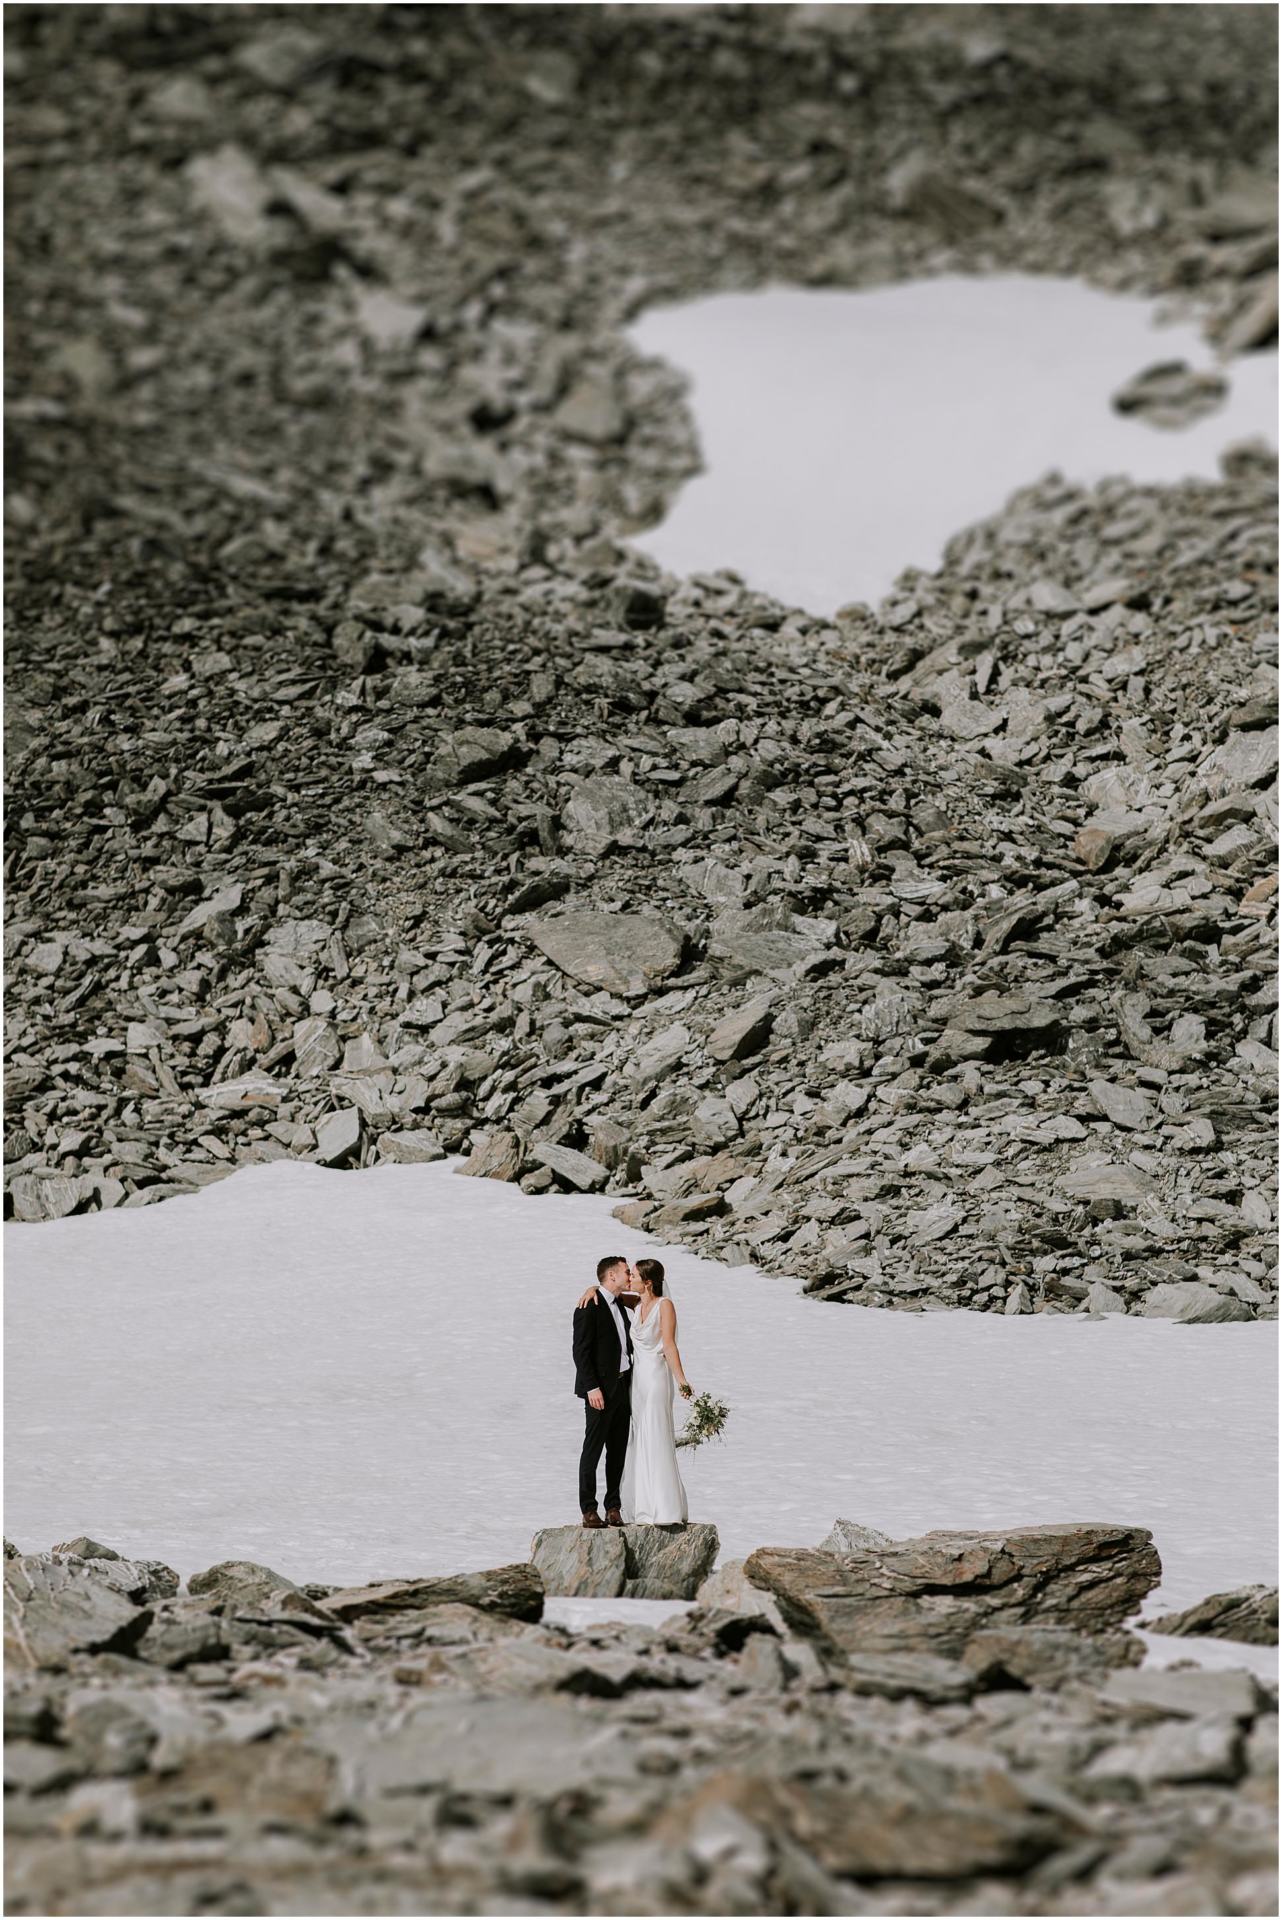 Charlotte Kiri Photography - Wedding Photography with a bride and groom kissing on the edge of a glacier on Coromandel Peak in Wanaka, New Zealand.